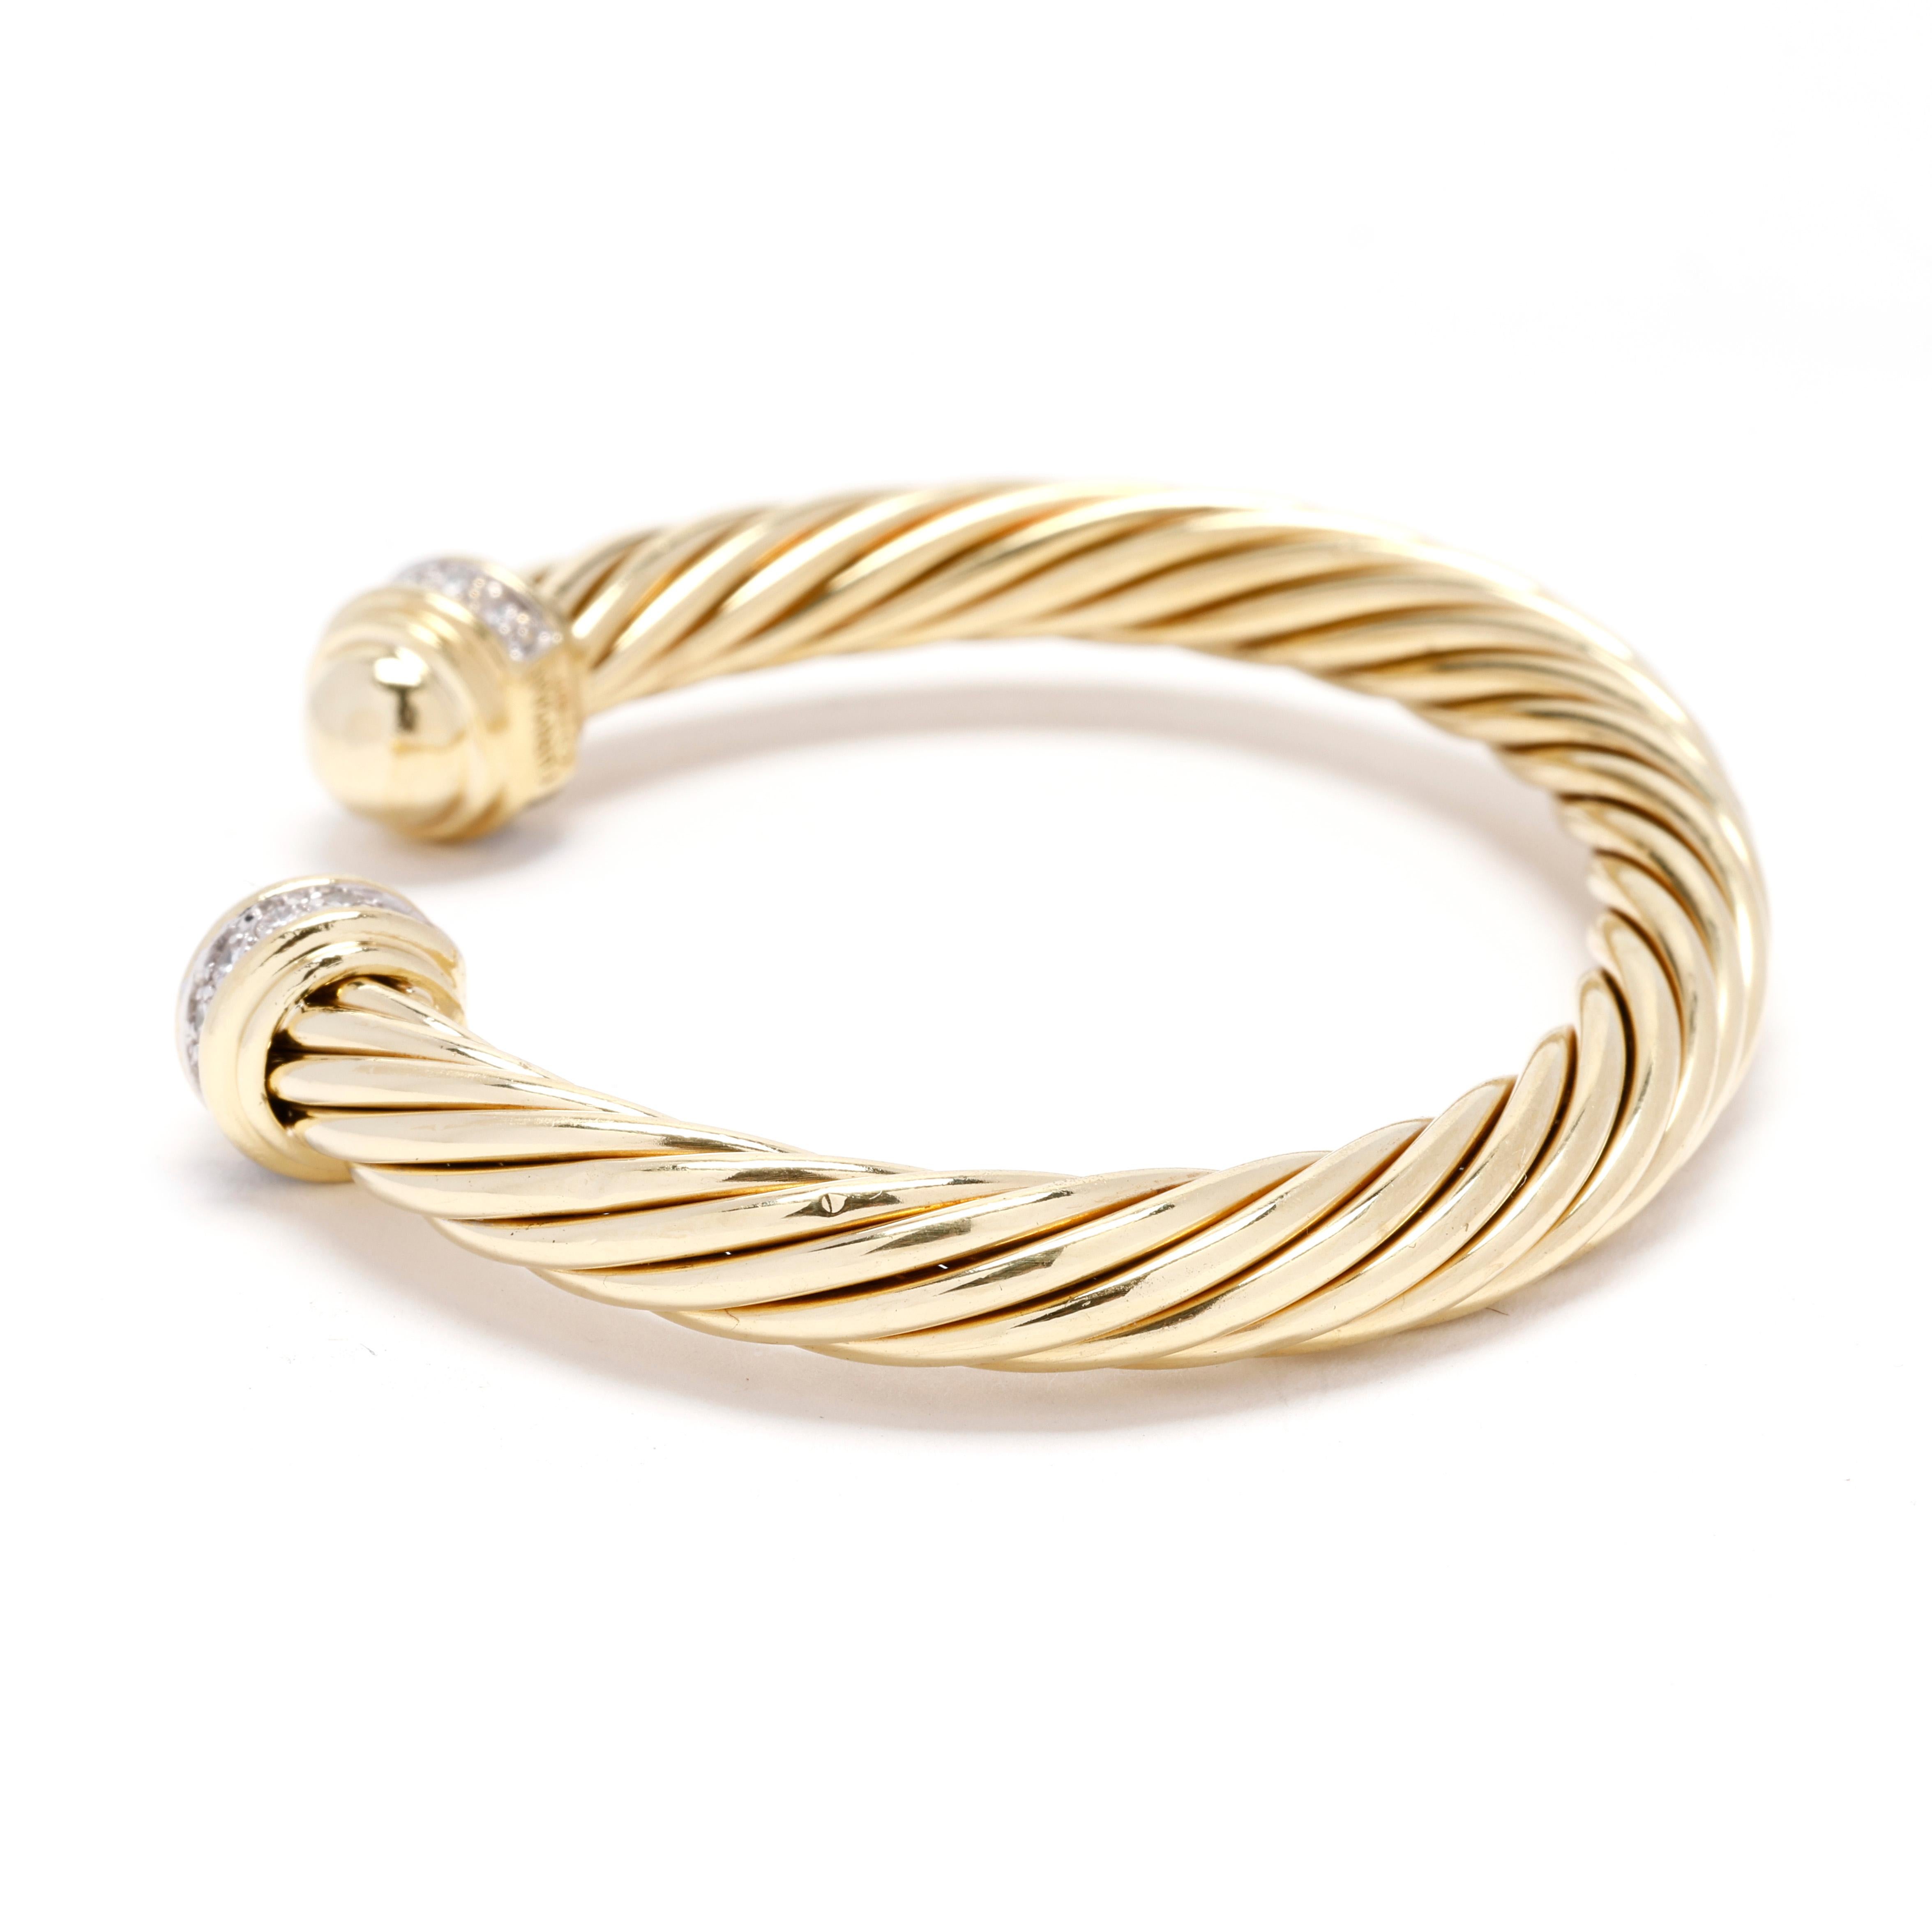 Women's or Men's David Yurman .40ctw Diamond and Gold Cuff Bracelet, 18k Yellow Gold, Twisted